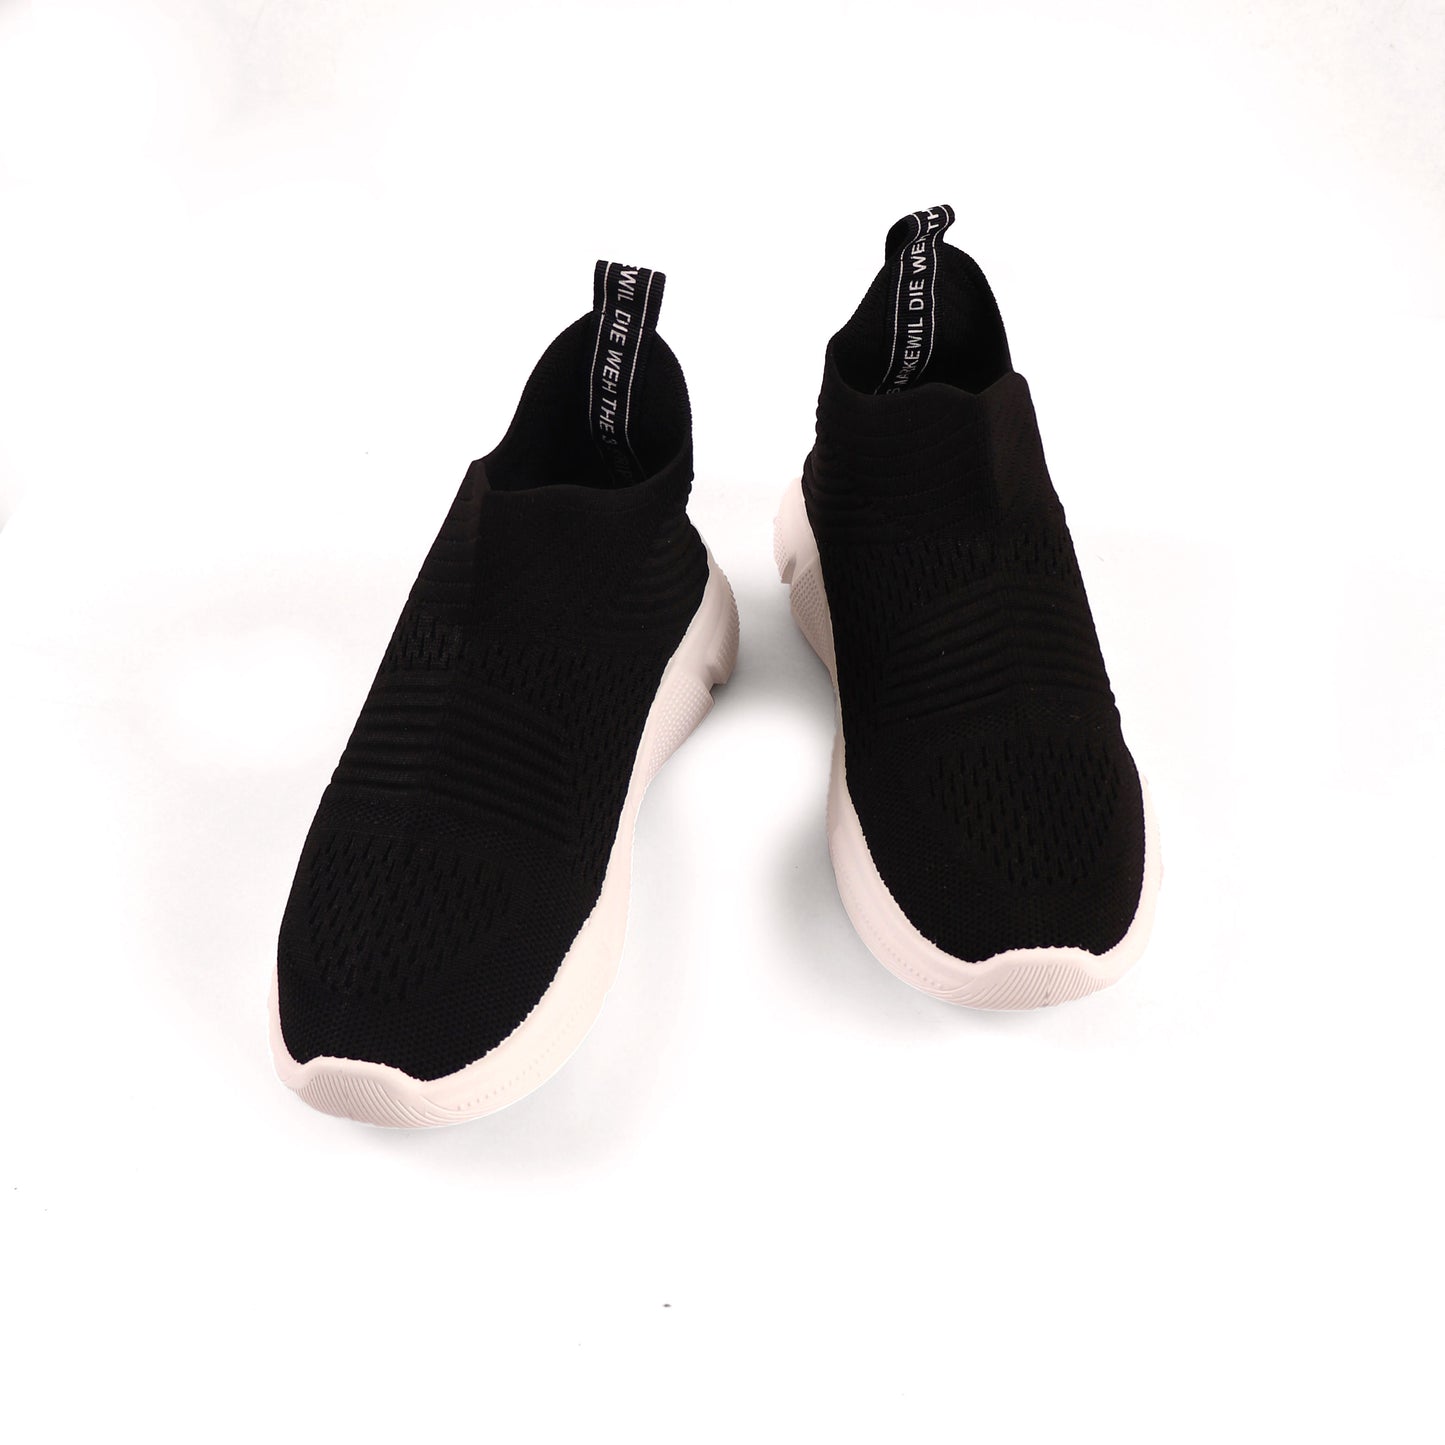 Foot Wear,The Cozy Gliders in Black - Cippele Multi Store